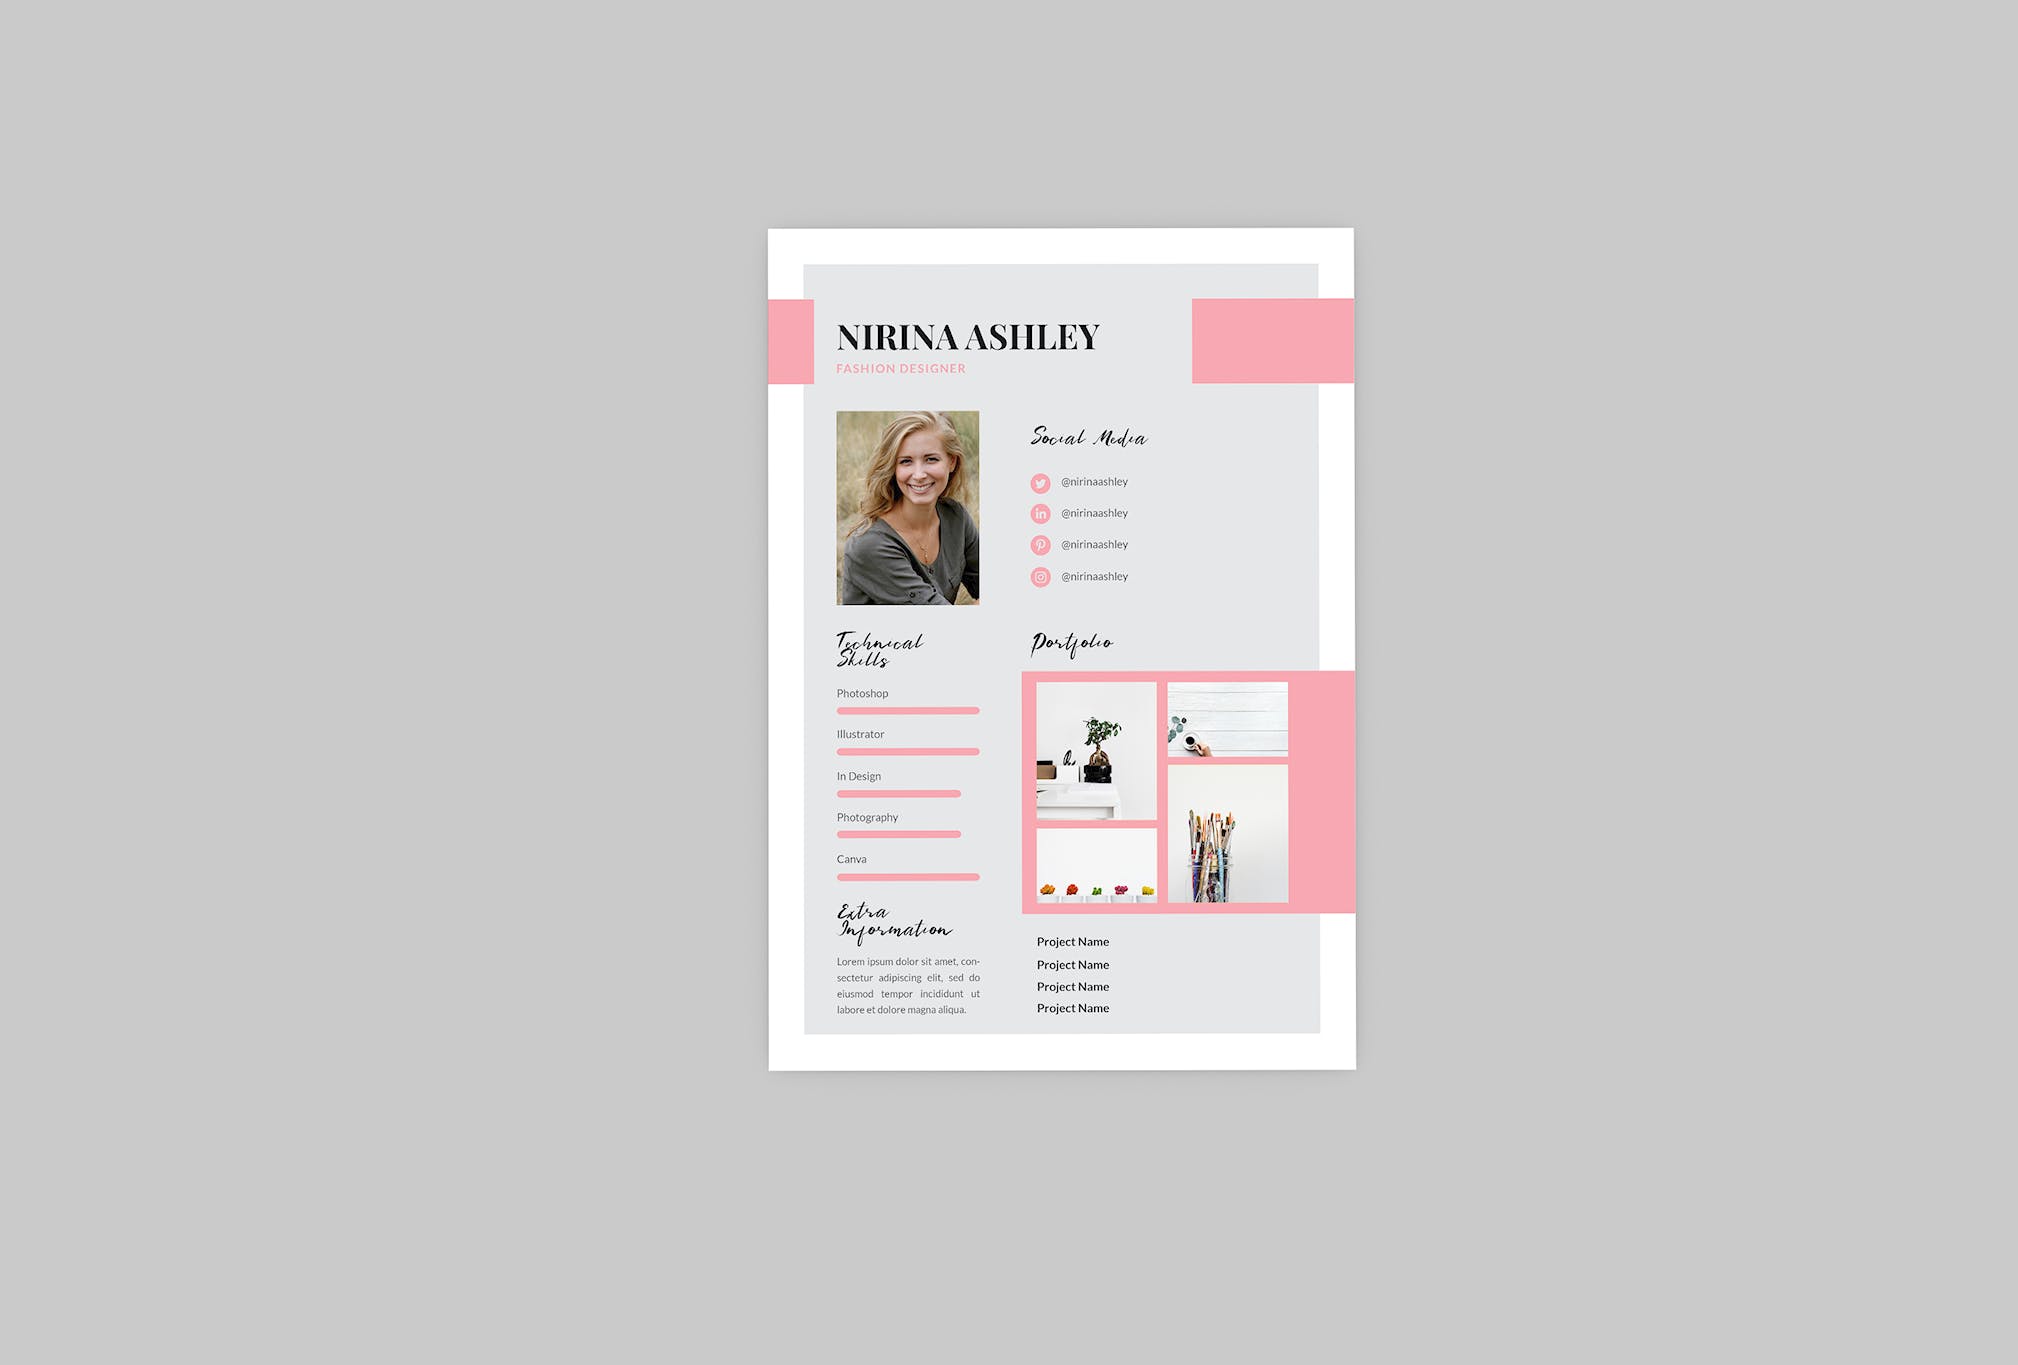 时尚编辑介绍信&蚂蚁素材精选简历模板 Nirina Fashion Resume Designer插图(3)